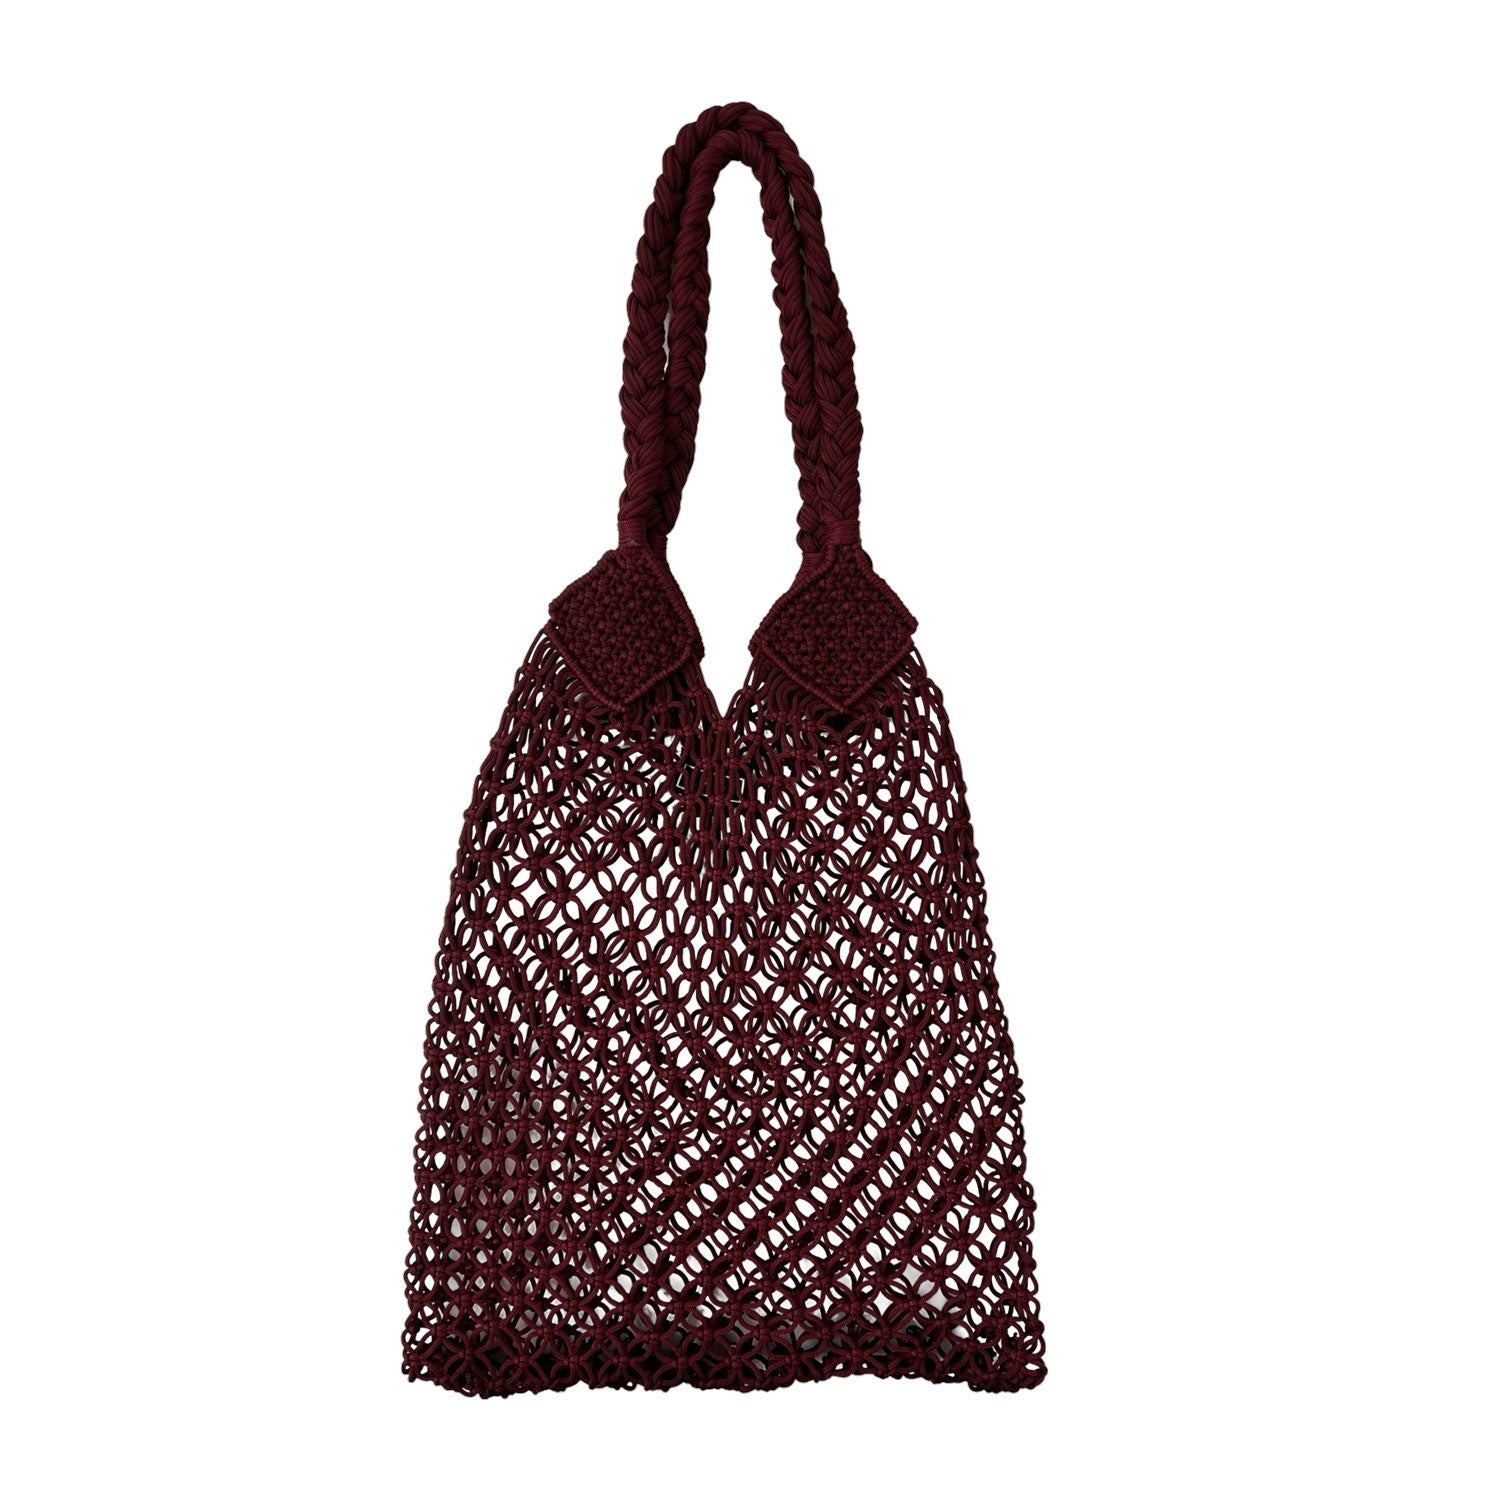 Braided Crochet Handbag in Wine Red